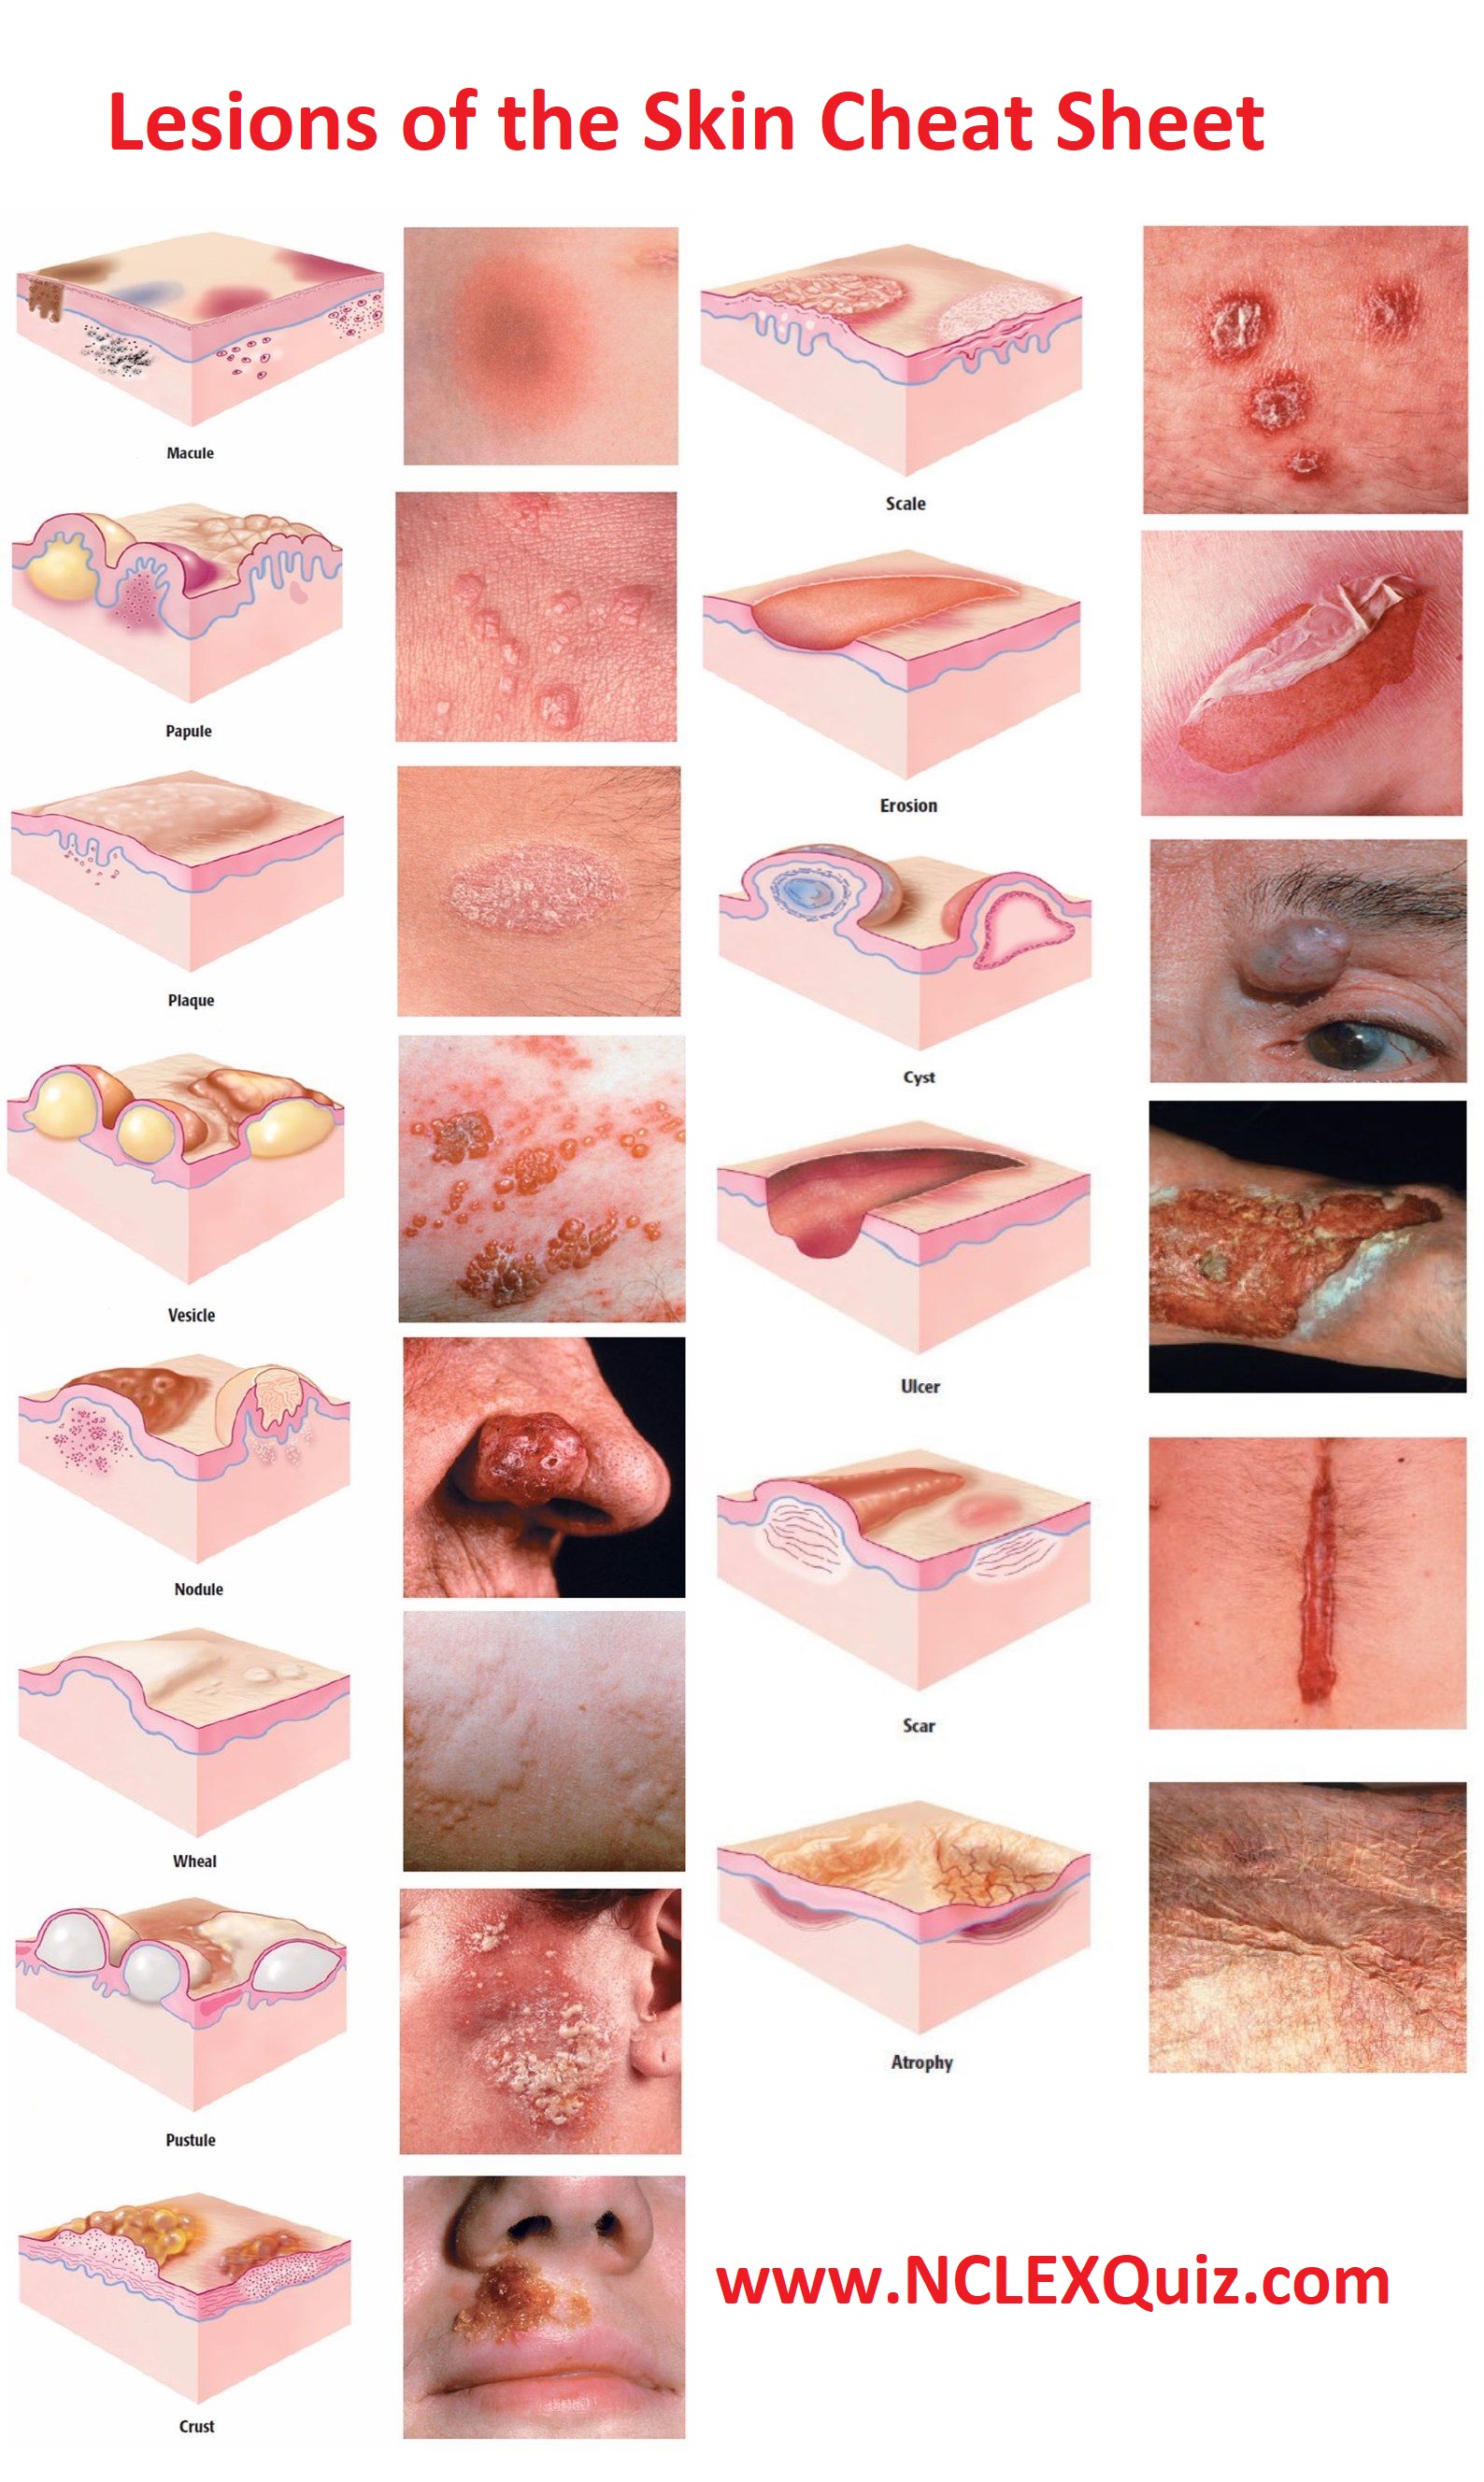 Nursing Dermatology: Lesions of the Skin Cheat Sheet